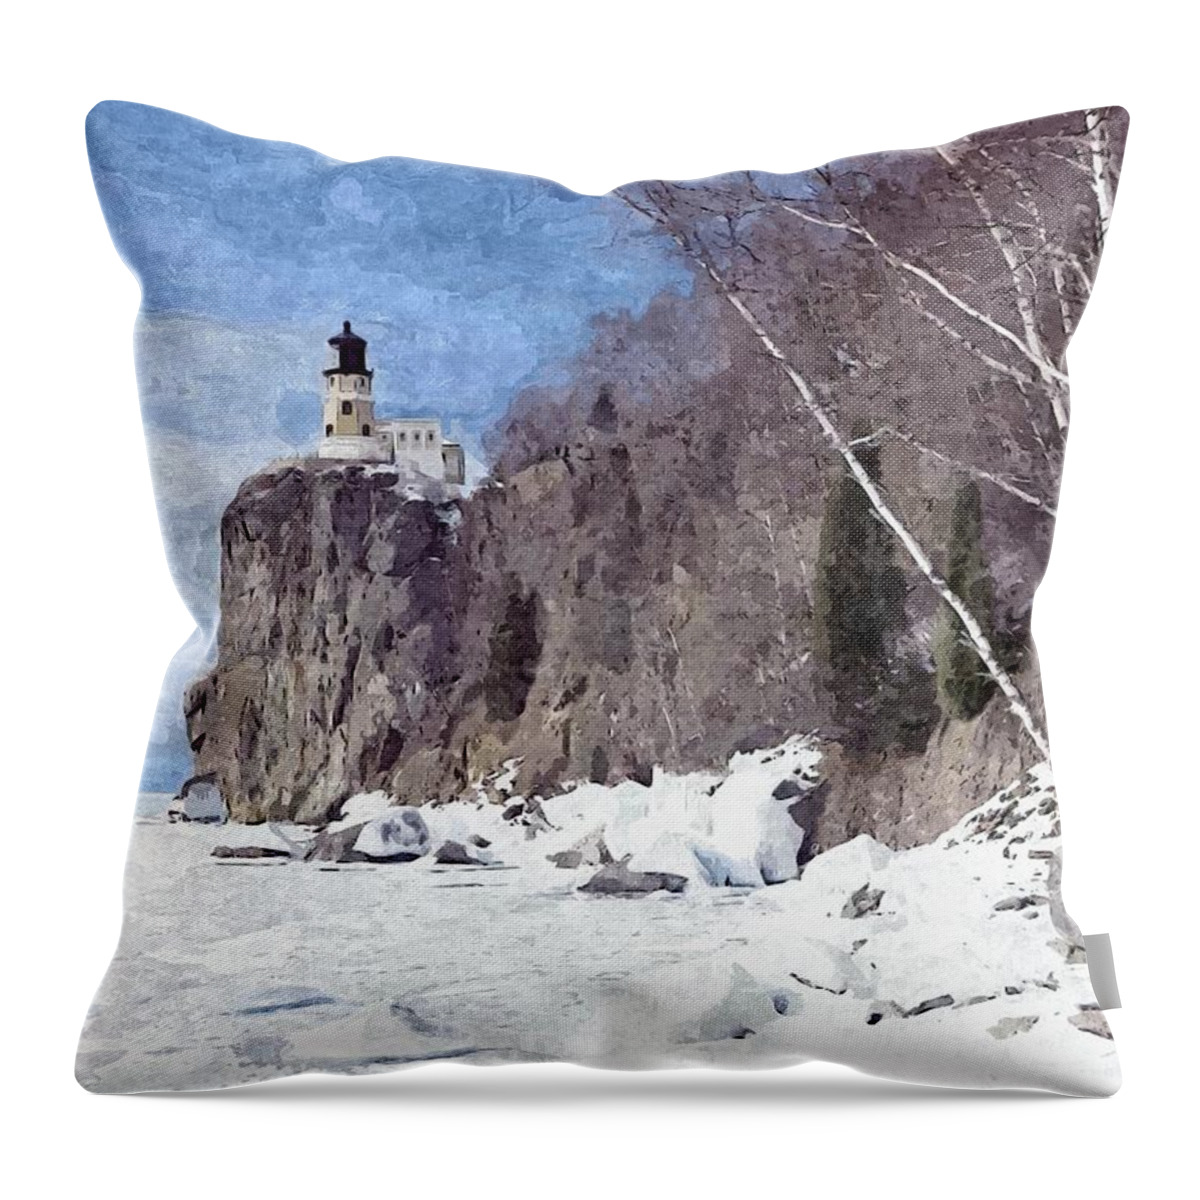 Shoreline Lighthouse Throw Pillow featuring the painting The Shoreline Lighthouse by Maciek Froncisz